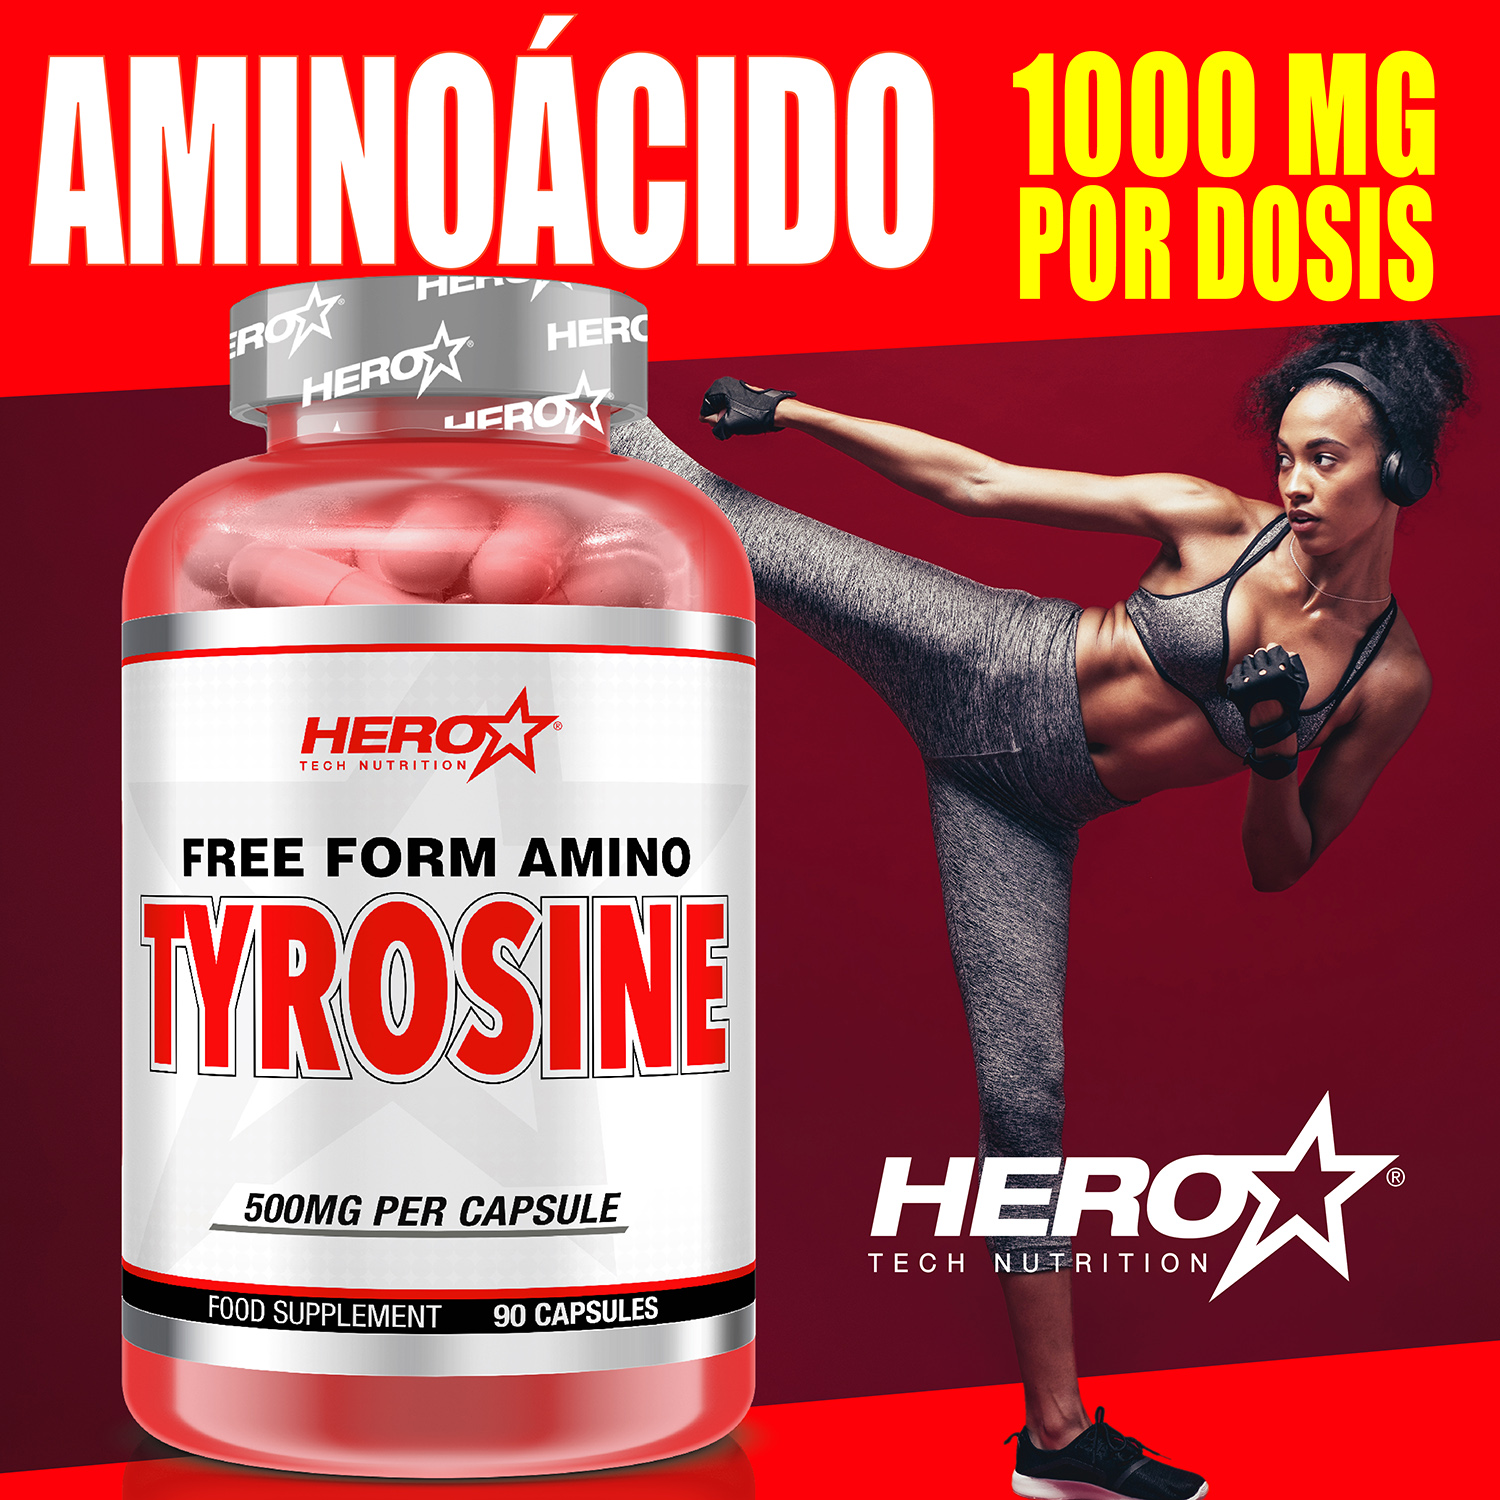 TYROSINE TIROSINA AMINOACIDO - HERO TECH NUTRITION herotechnutrition